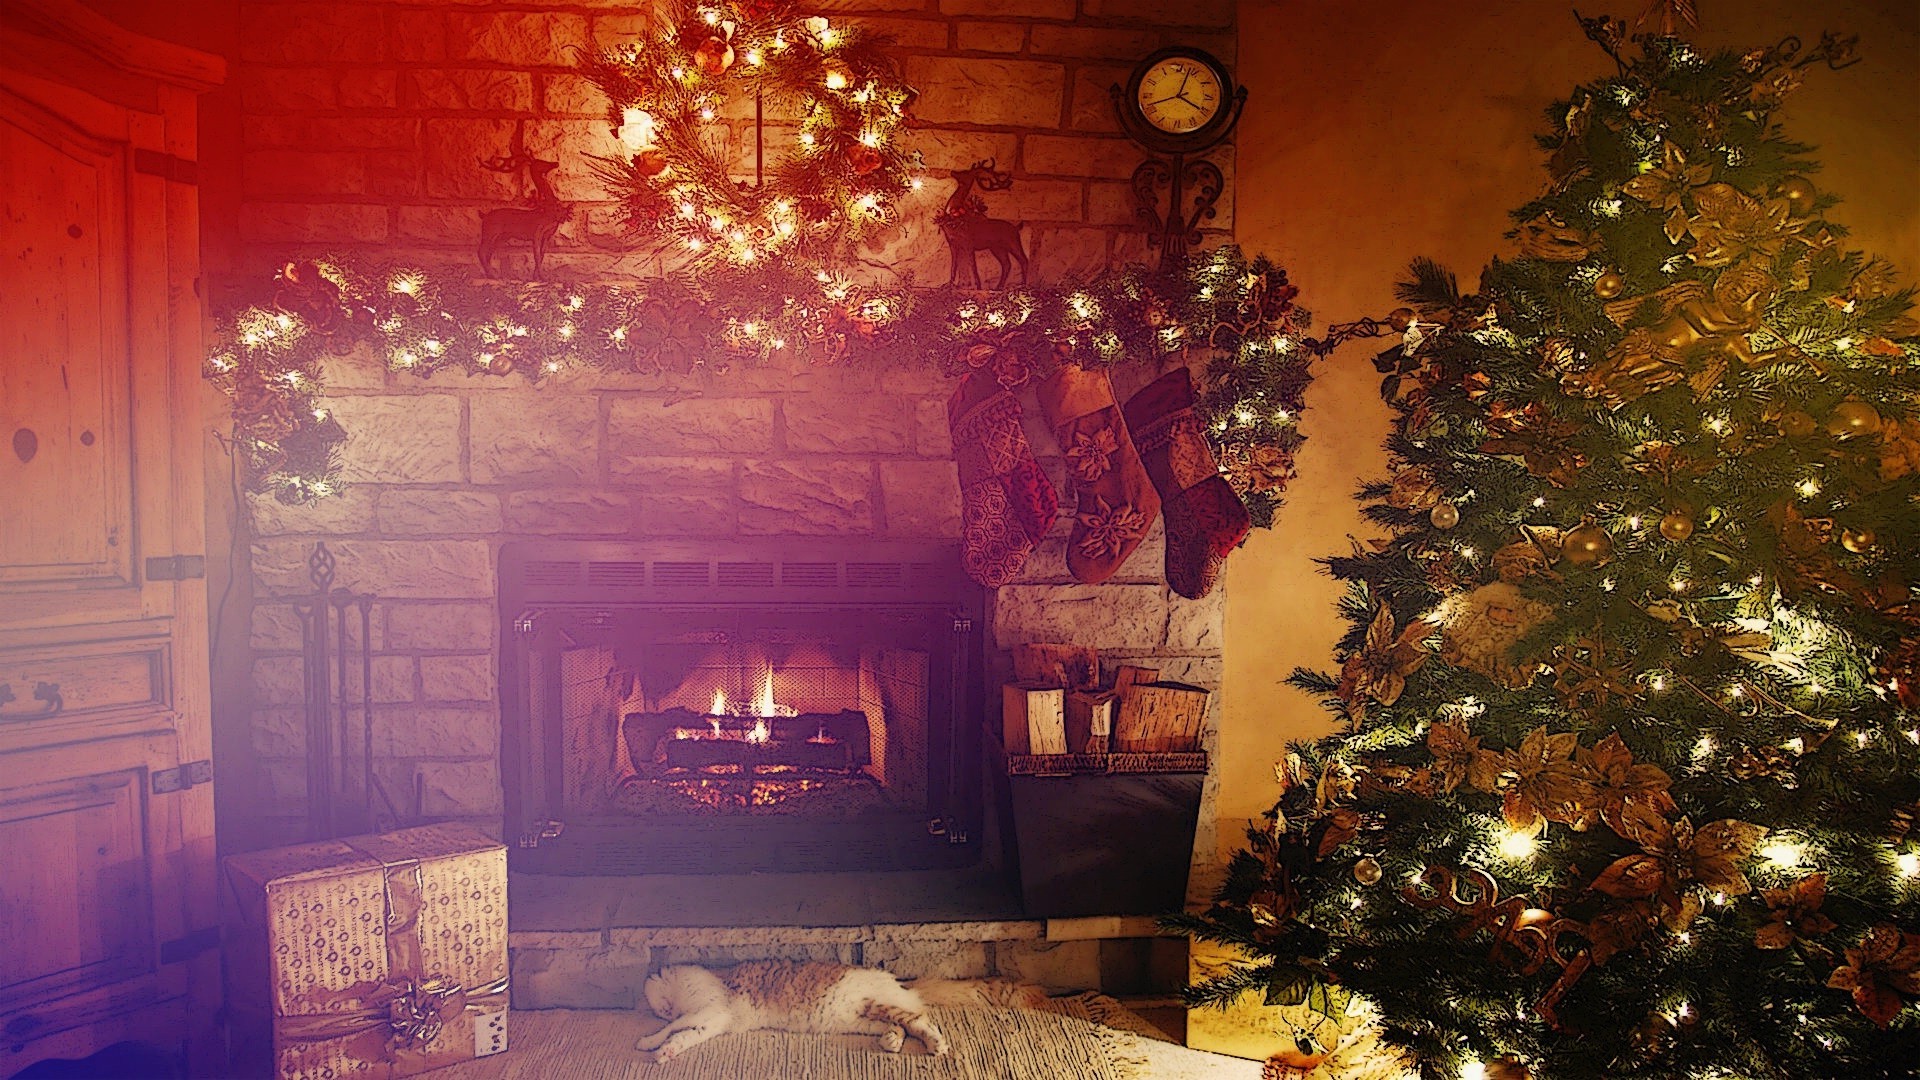 1920x1080 Christmas tree and fireplace - YouTube ...